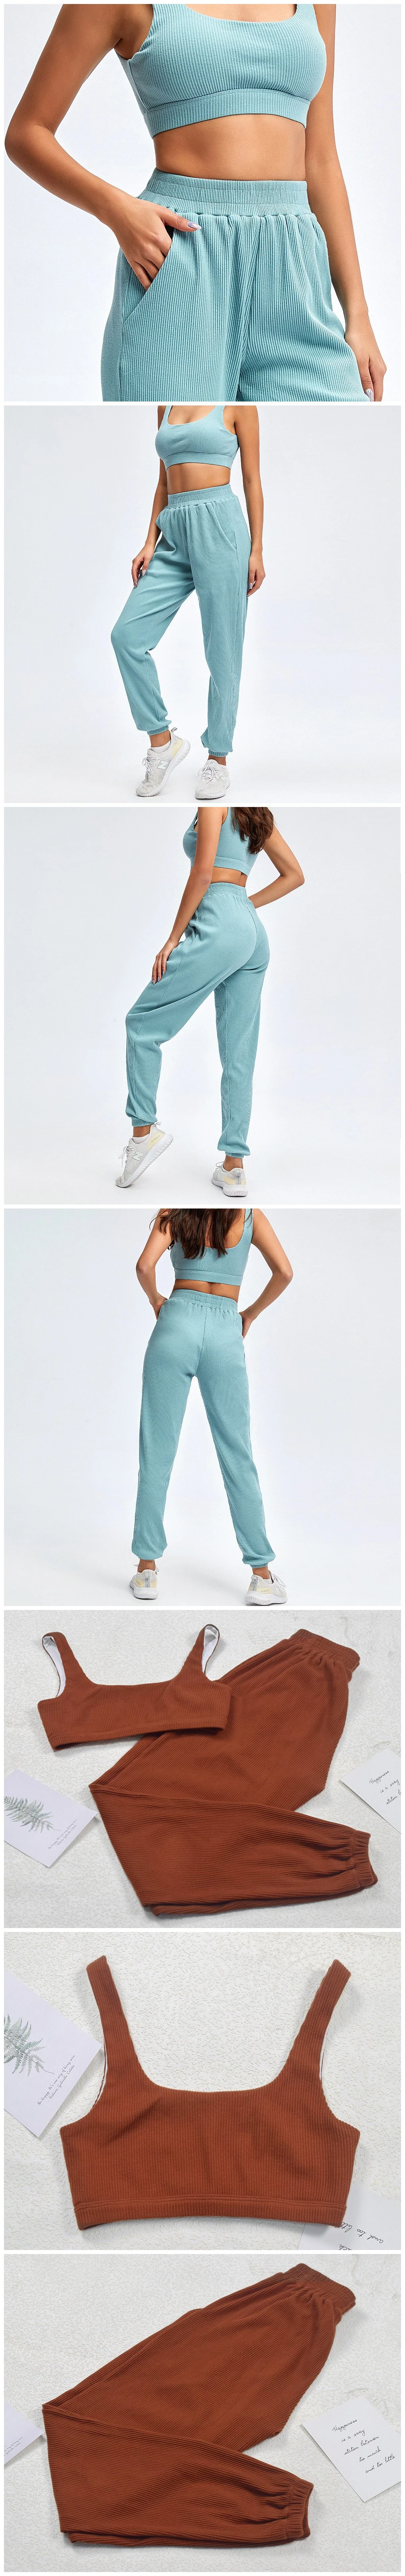 Wholesale Sportswear Yoga Workout Clothes Athleisure Sweat Suits for Women Gym Active Wear Jogging Suit